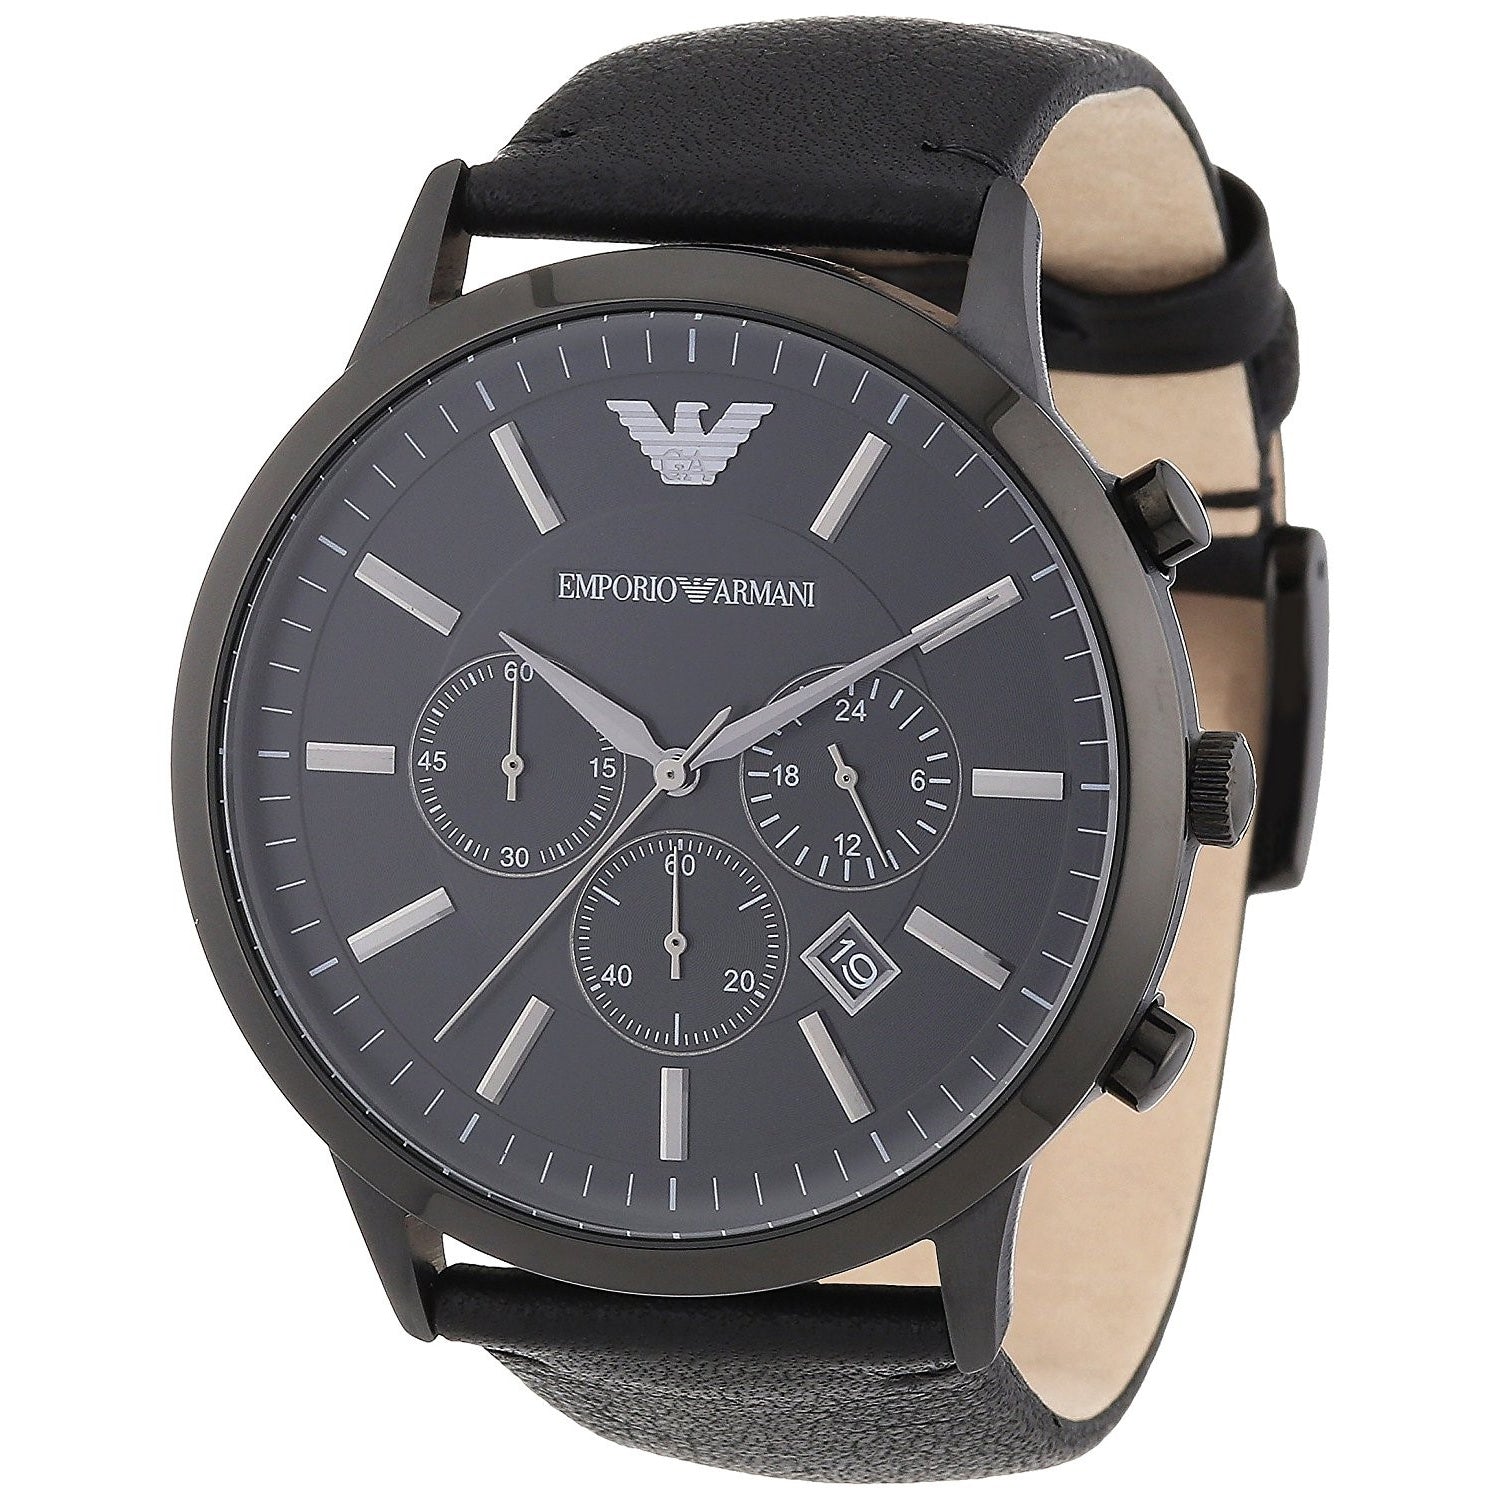 Emporio Armani Men's AR2461 Black Leather Watch | eBay